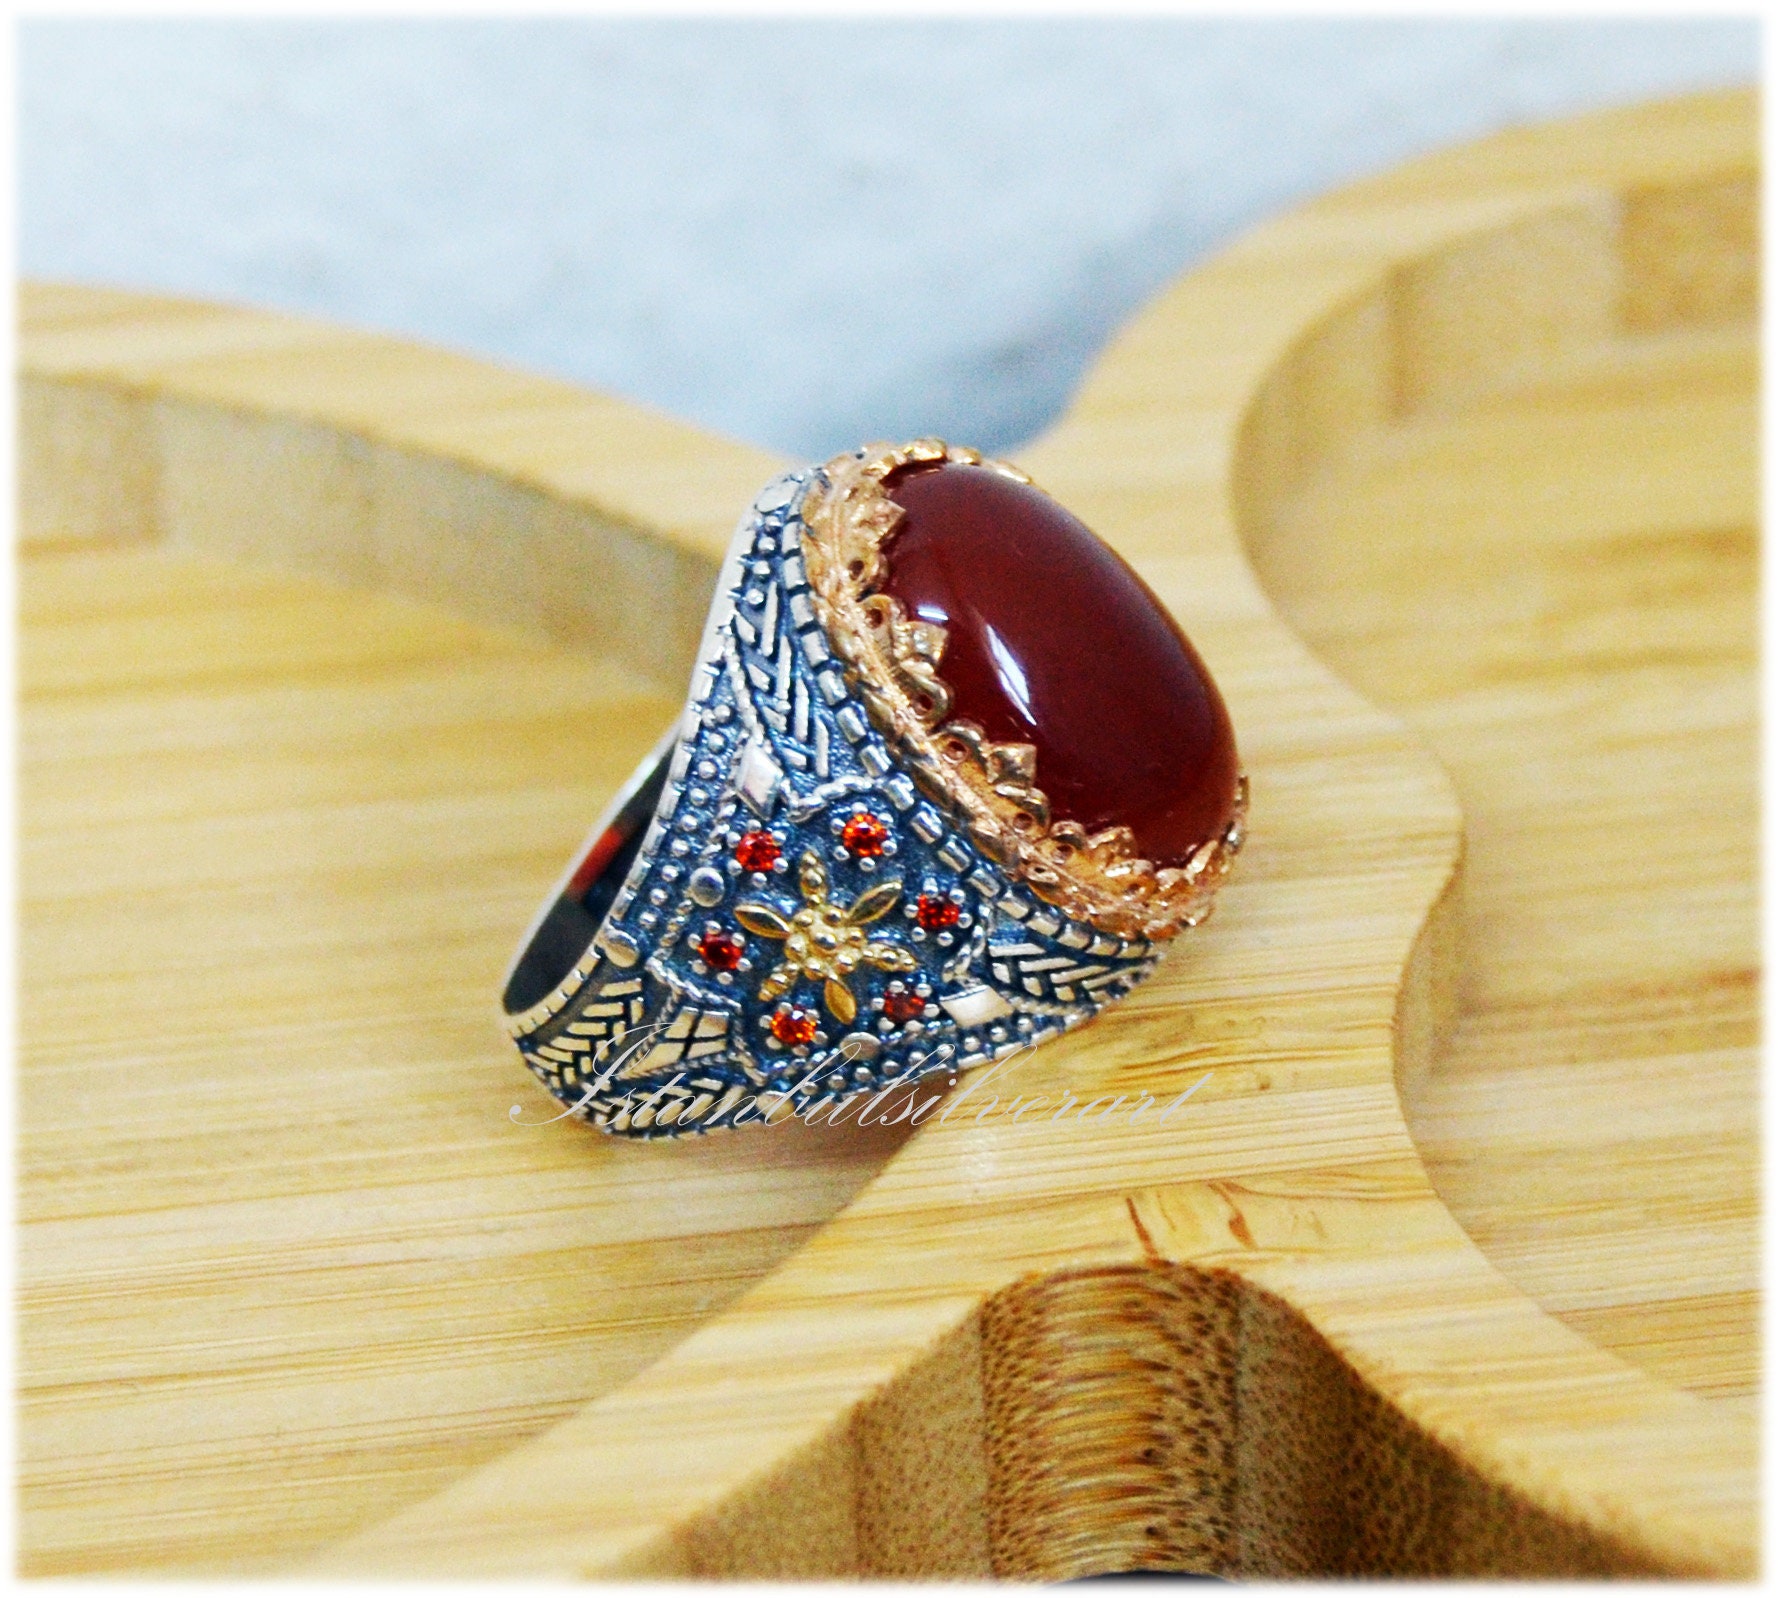 925k Sterling Silver Ring Red Agate Stone Turkish Handmade Silver Men Ring Ottoman Mens Ring Gift for Him Mens Handmade Ring